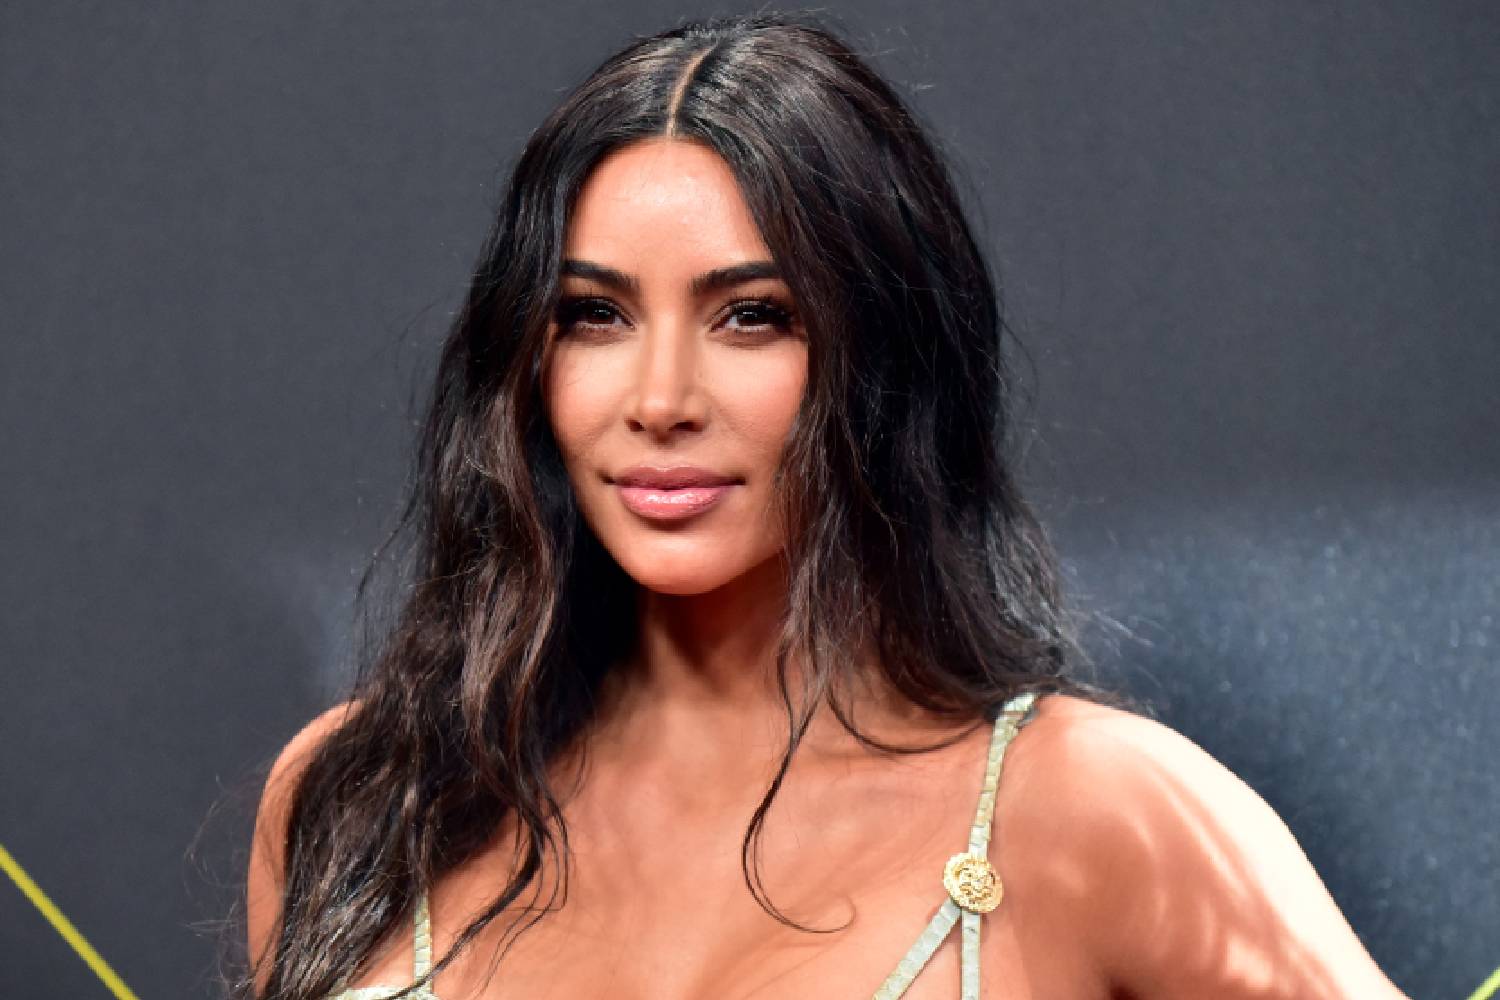 Kim Kardashian Reveals She Cries “Myself To Sleep” Over Parenting Struggles